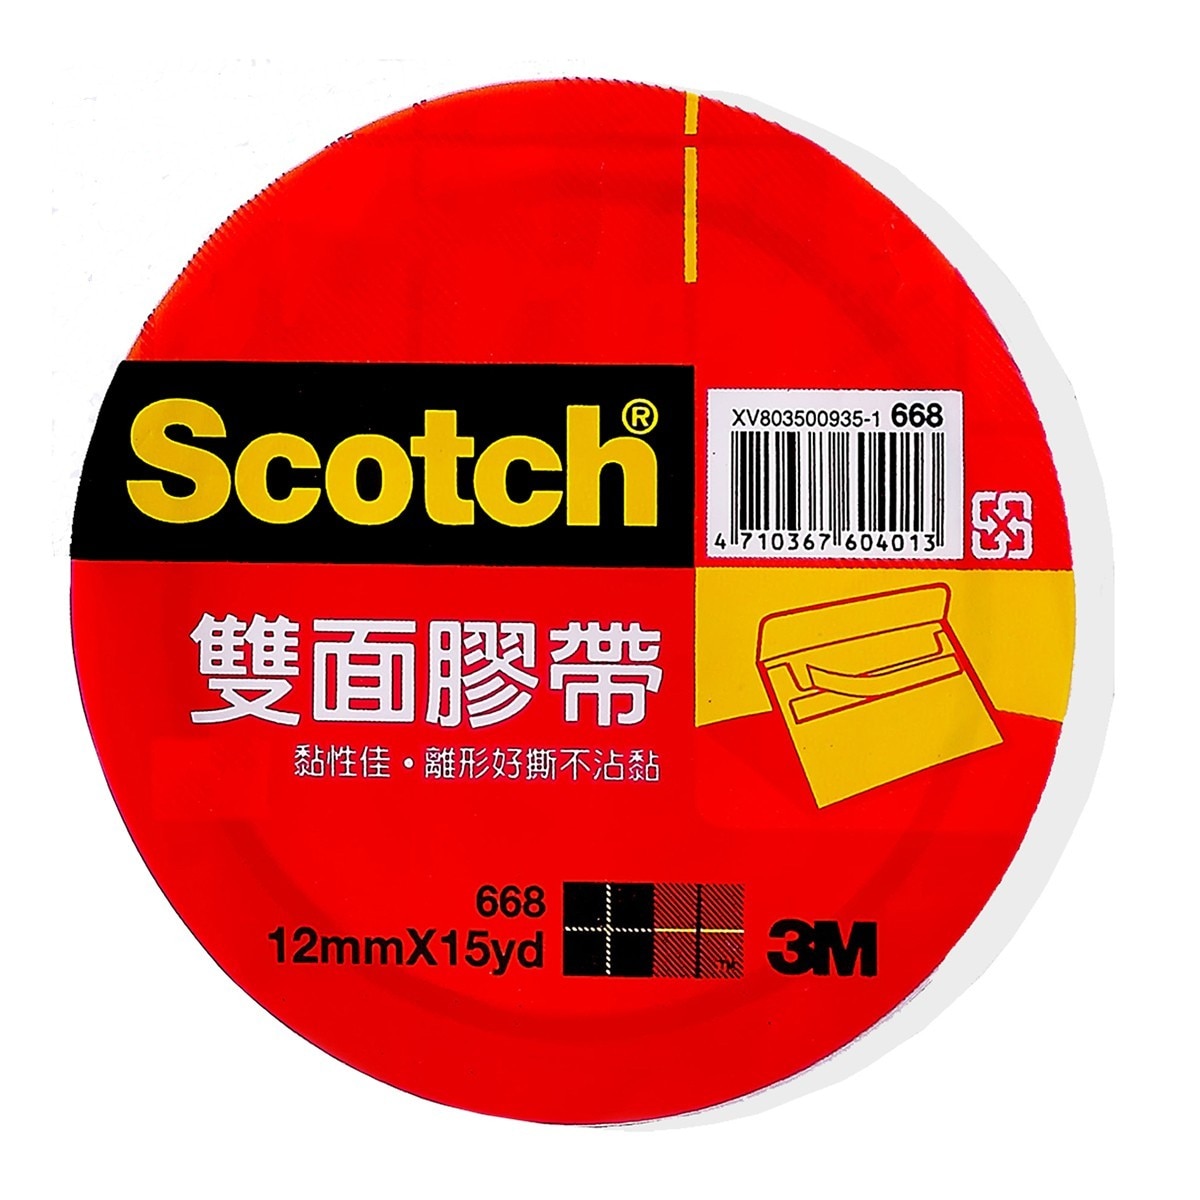 3M Scotch 雙面棉紙膠帶組 12公釐 X 15碼 X 24入